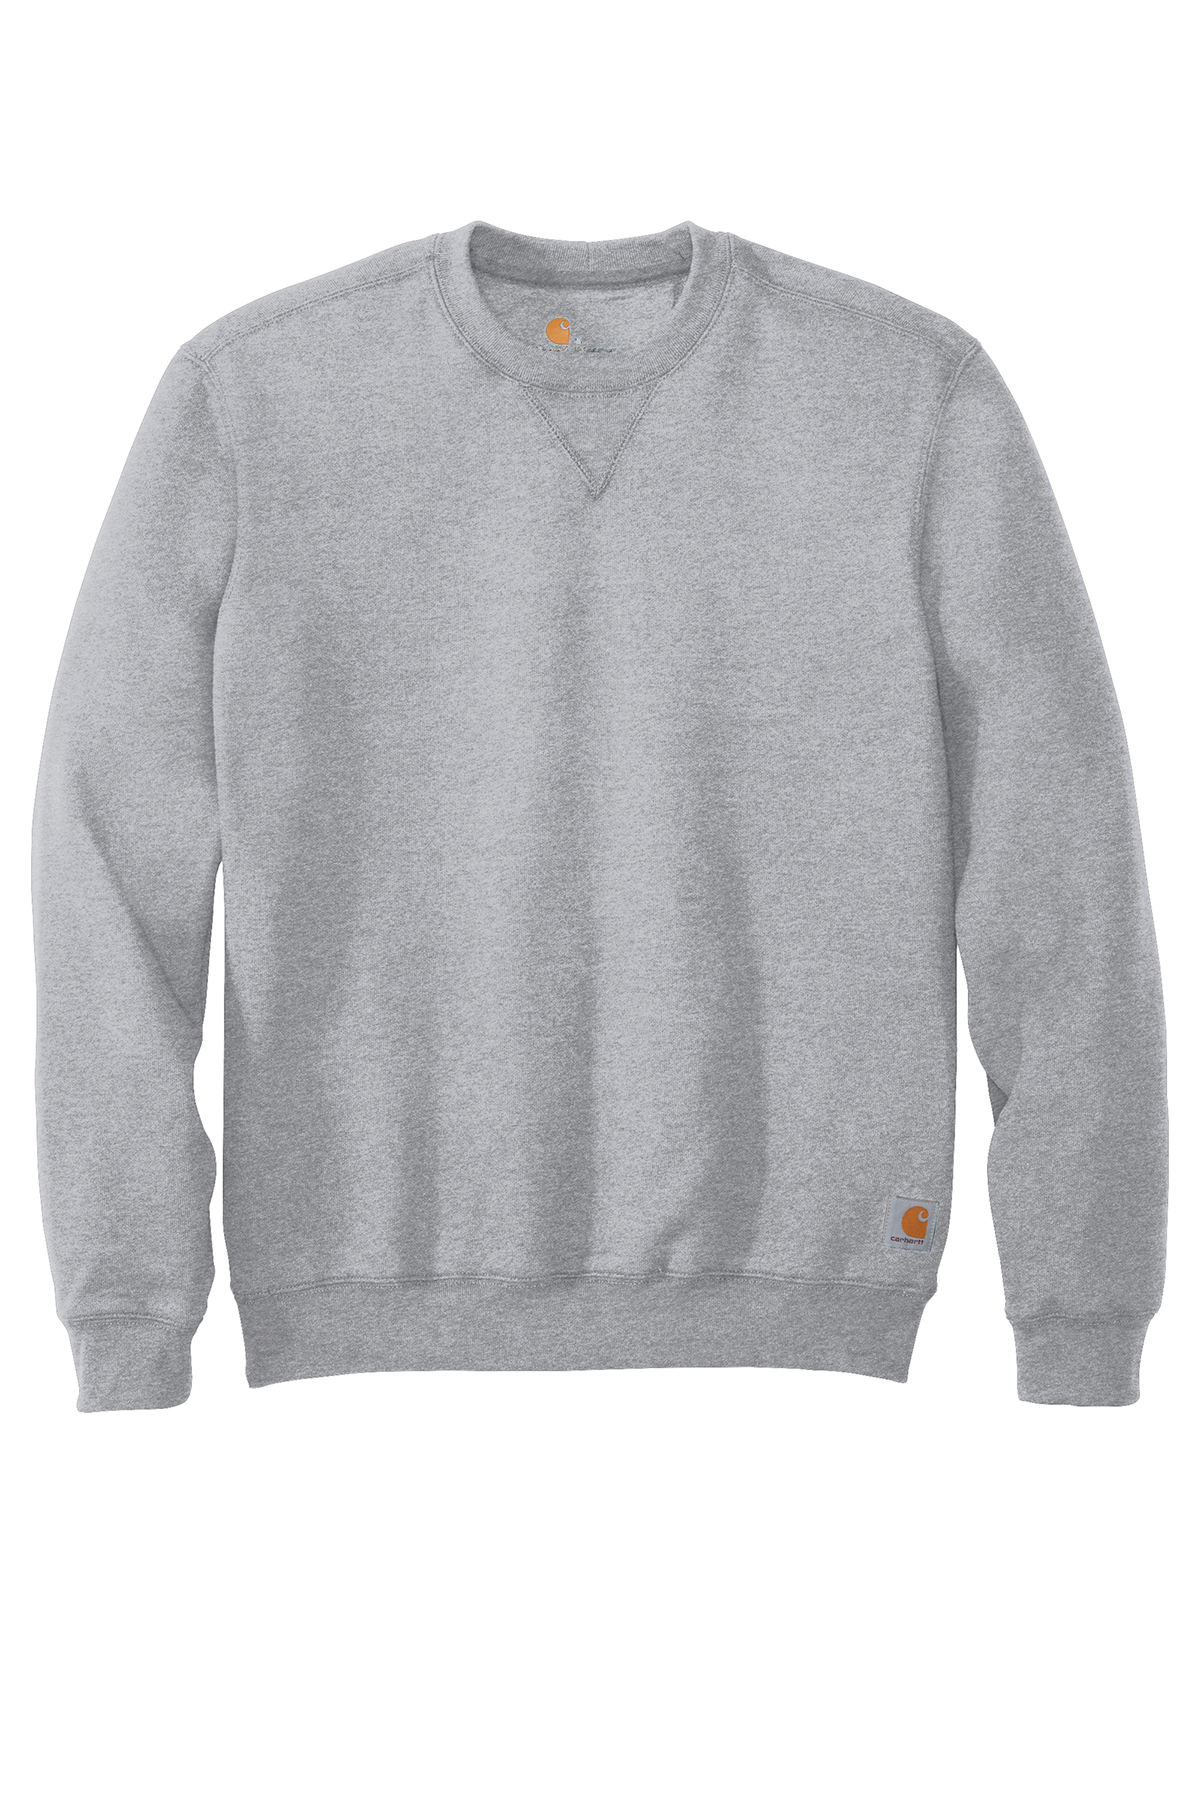 Carhartt Midweight Crewneck Sweatshirt | Product | Online Apparel Market